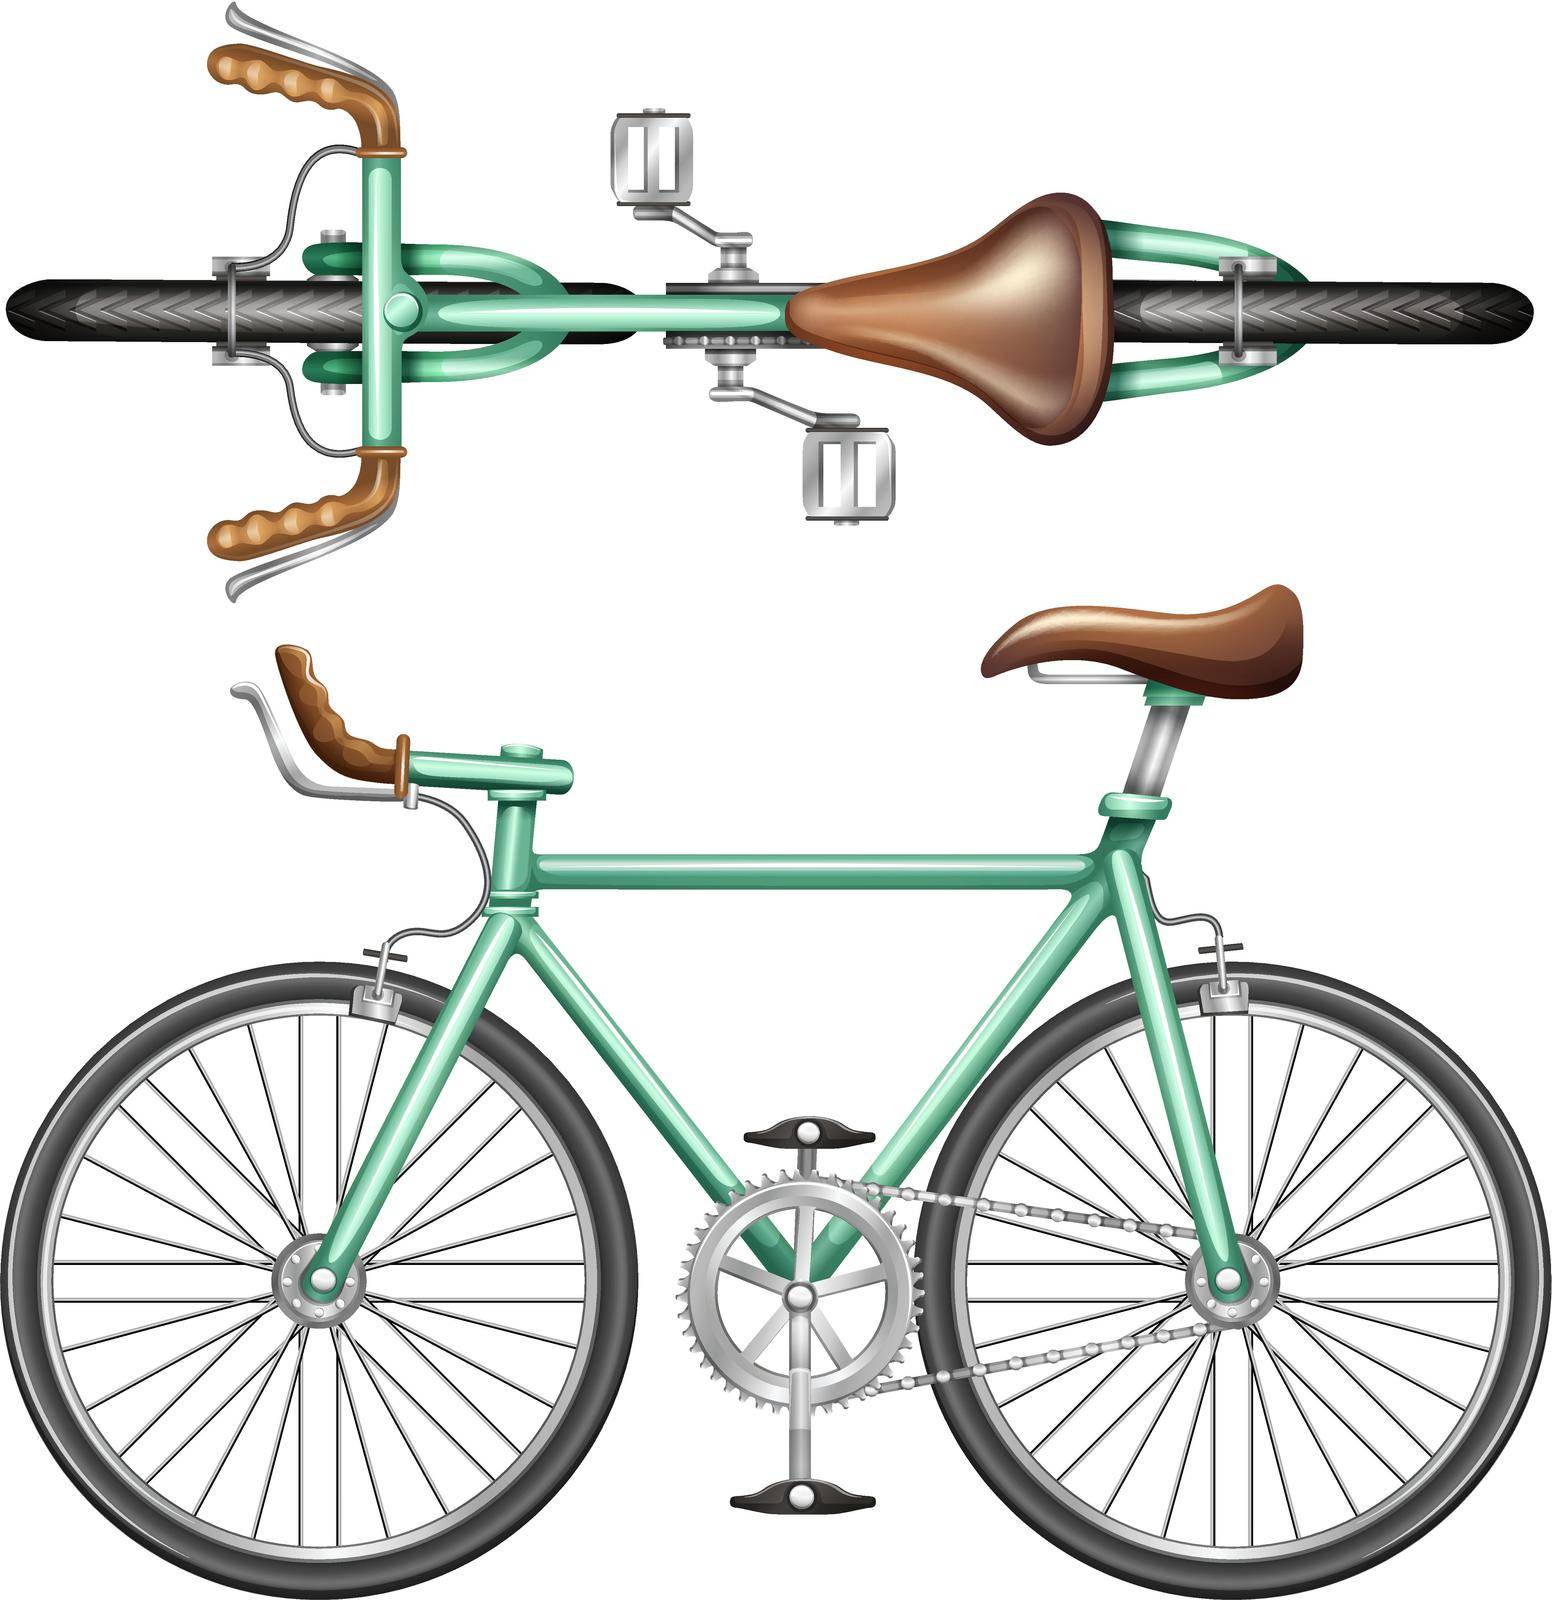 A green bike by iimages